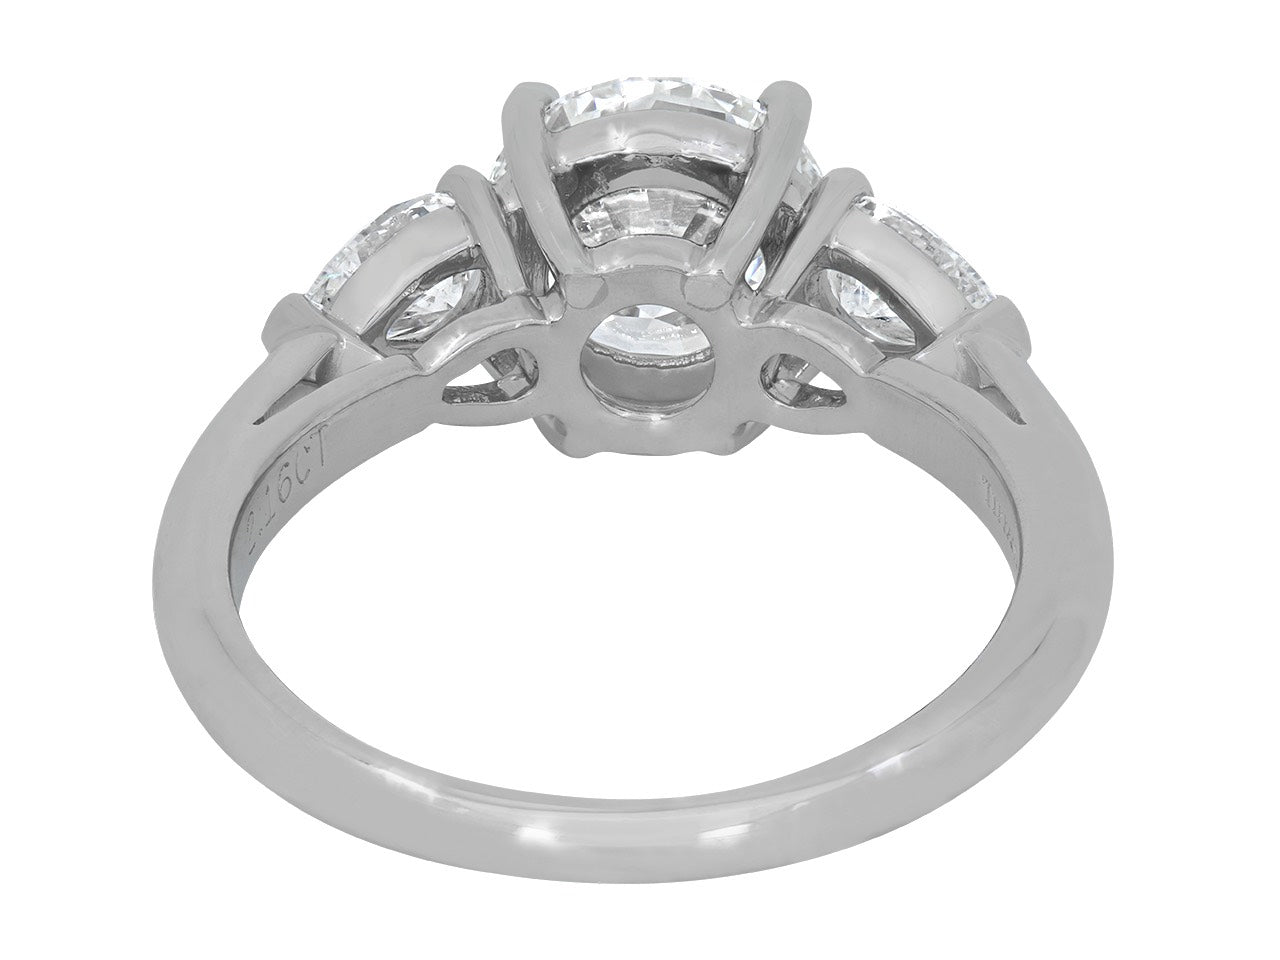 Tiffany & Co. Diamond Ring, 2.04 Carat E/VS1, in Platinum